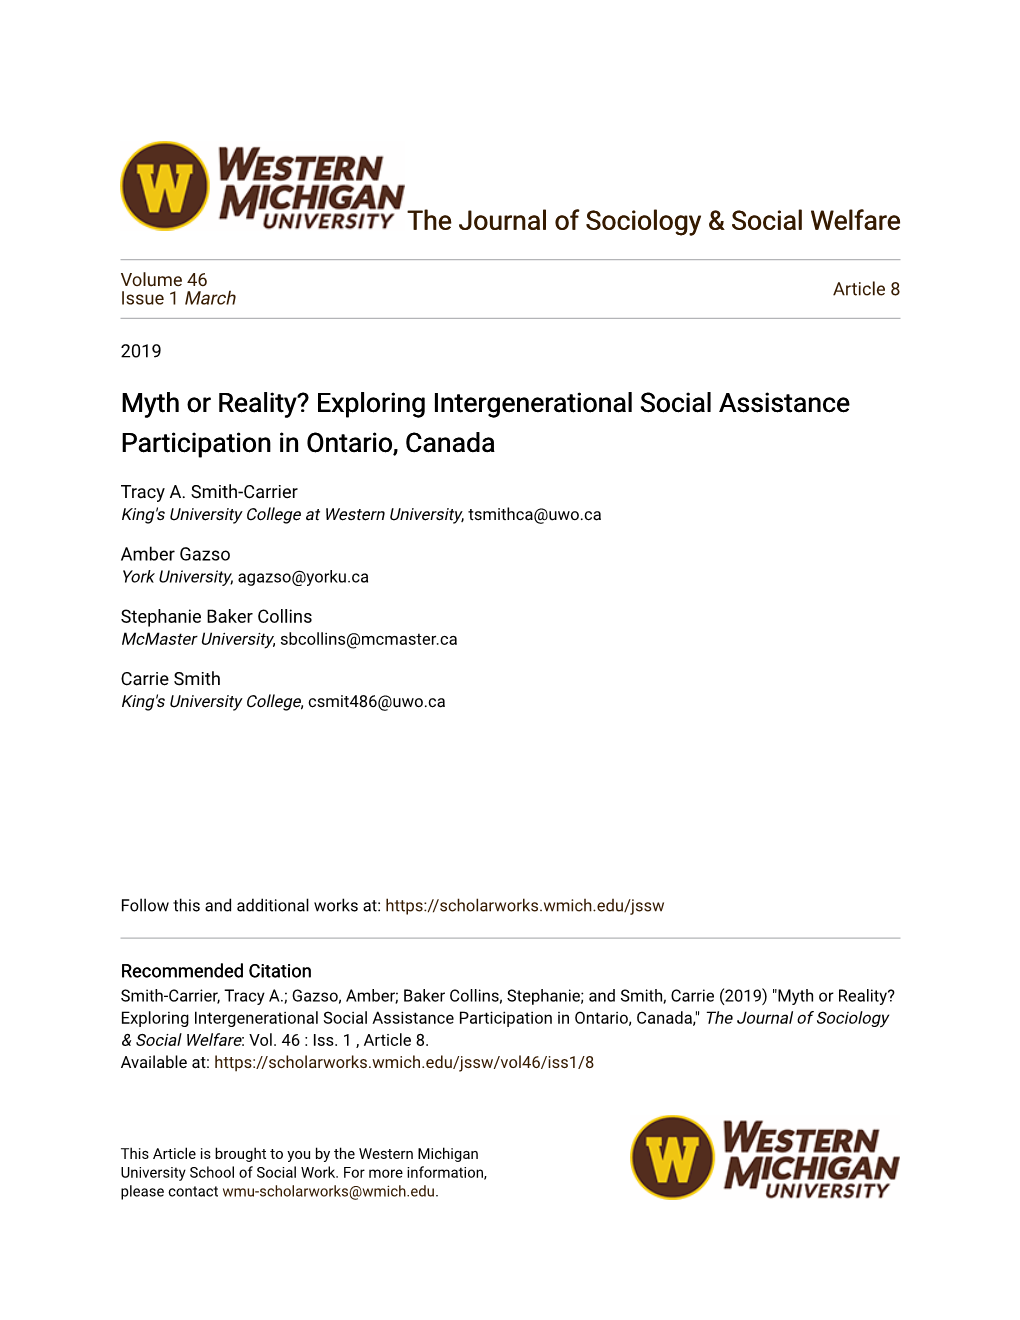 Exploring Intergenerational Social Assistance Participation in Ontario, Canada